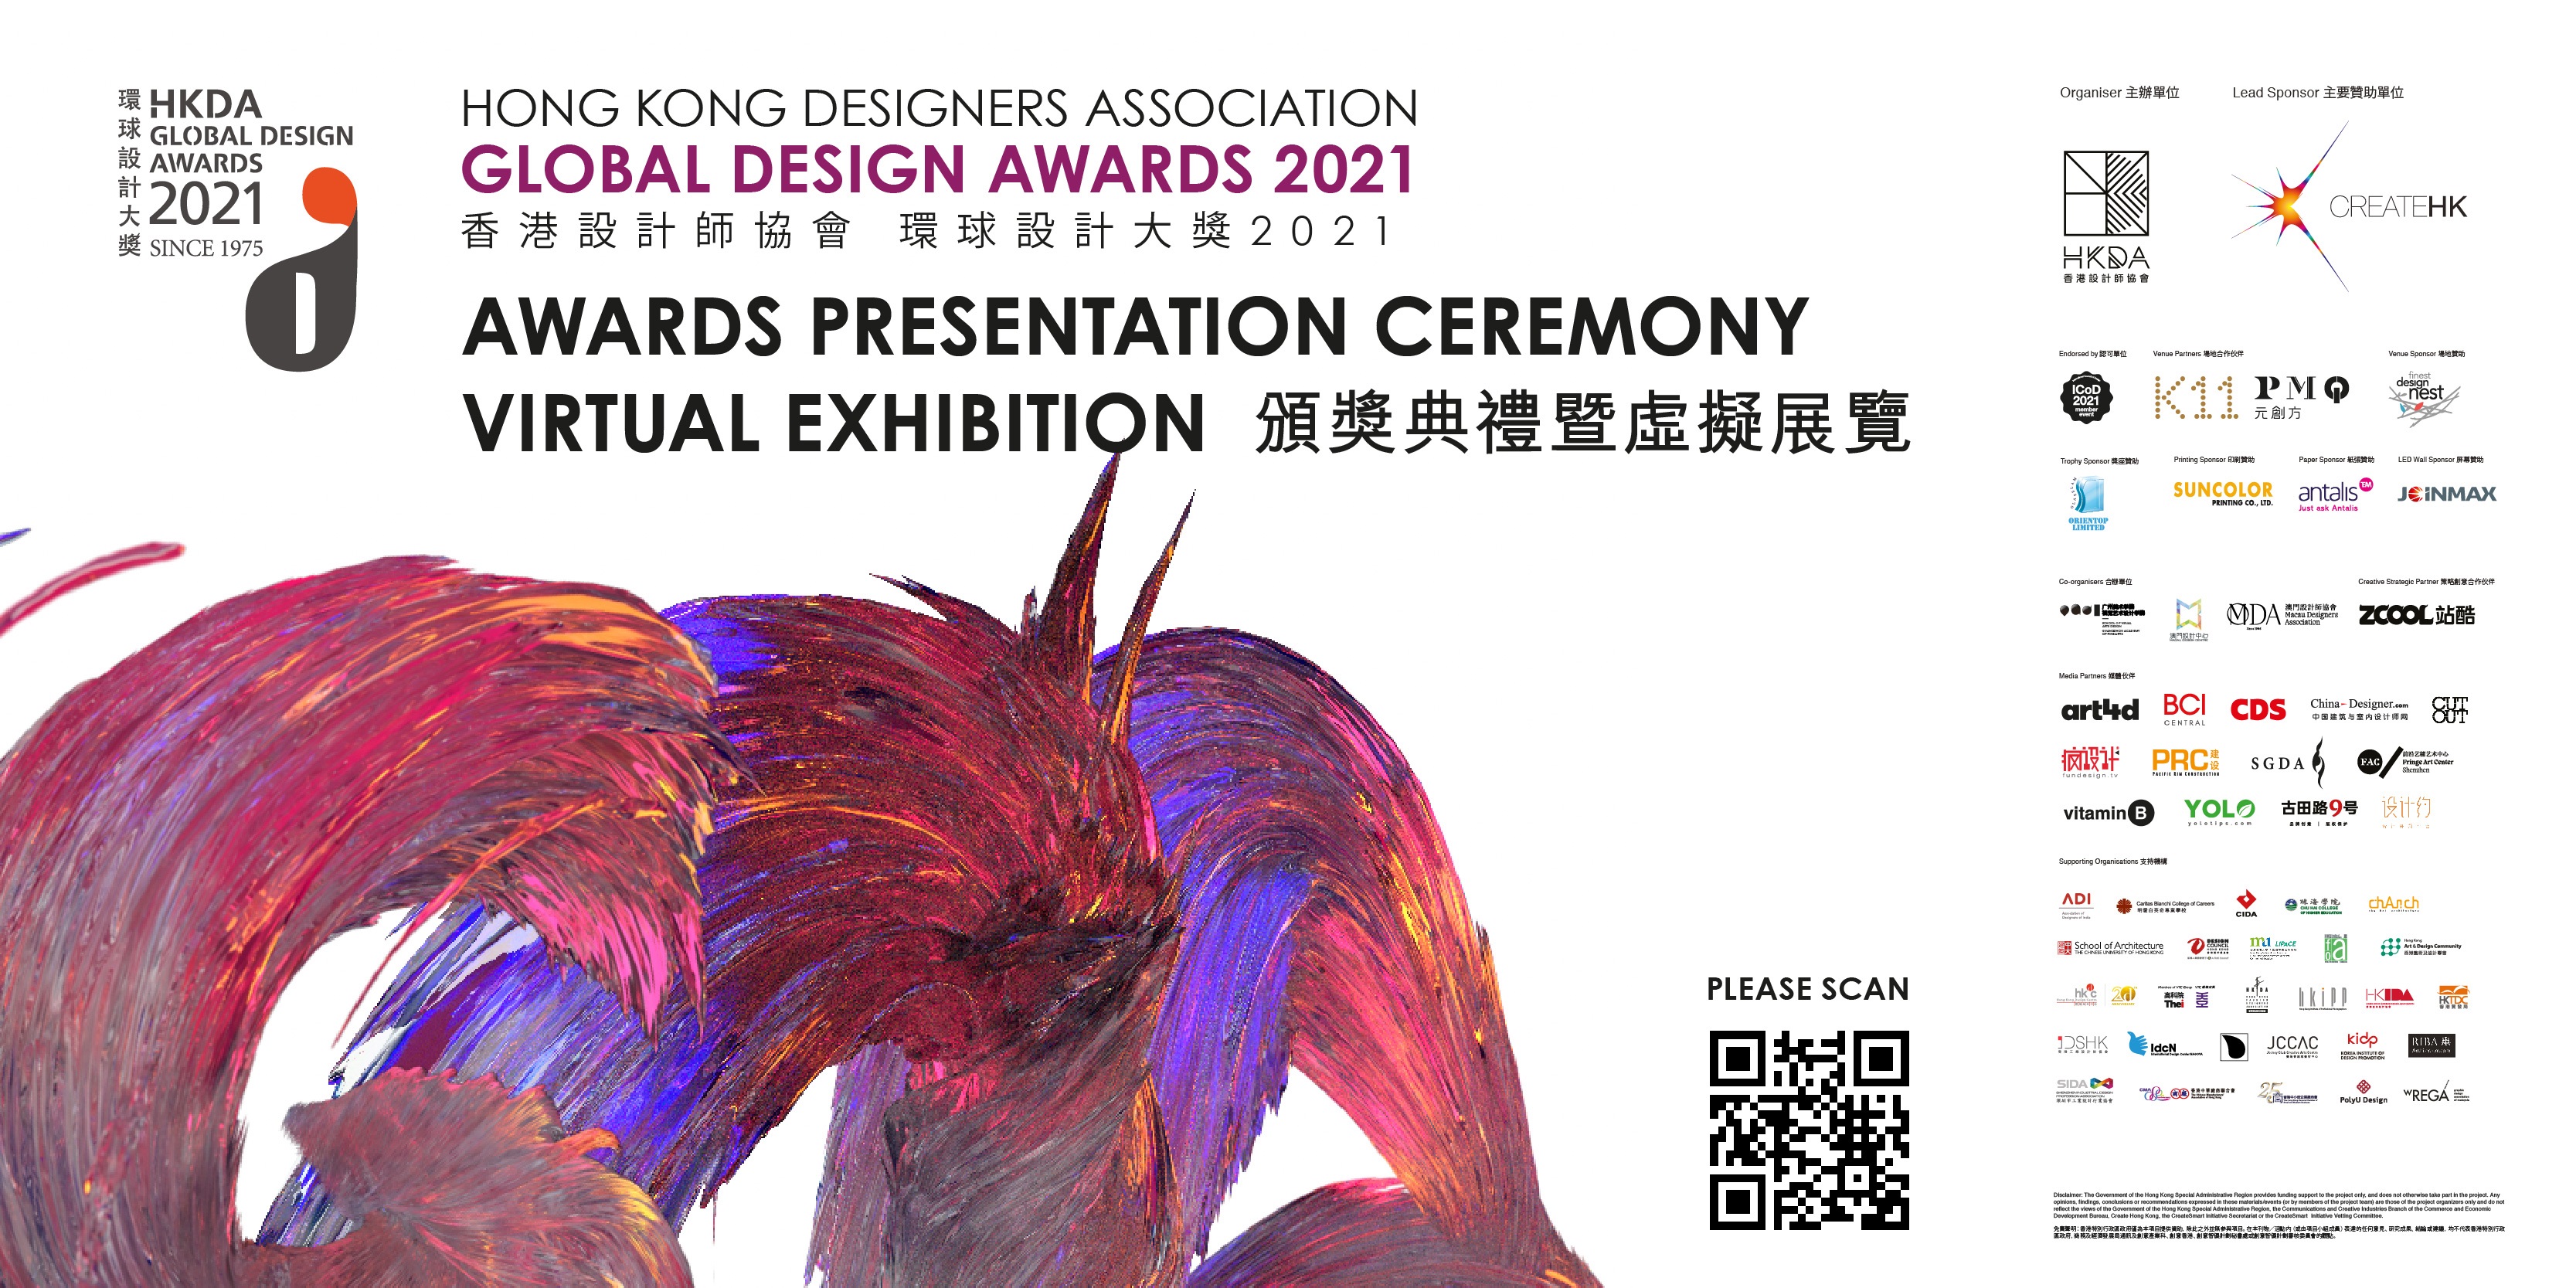 HKDA Global Design Awards 2021 – Online Awards Presentation Ceremony Virtual Exhibition